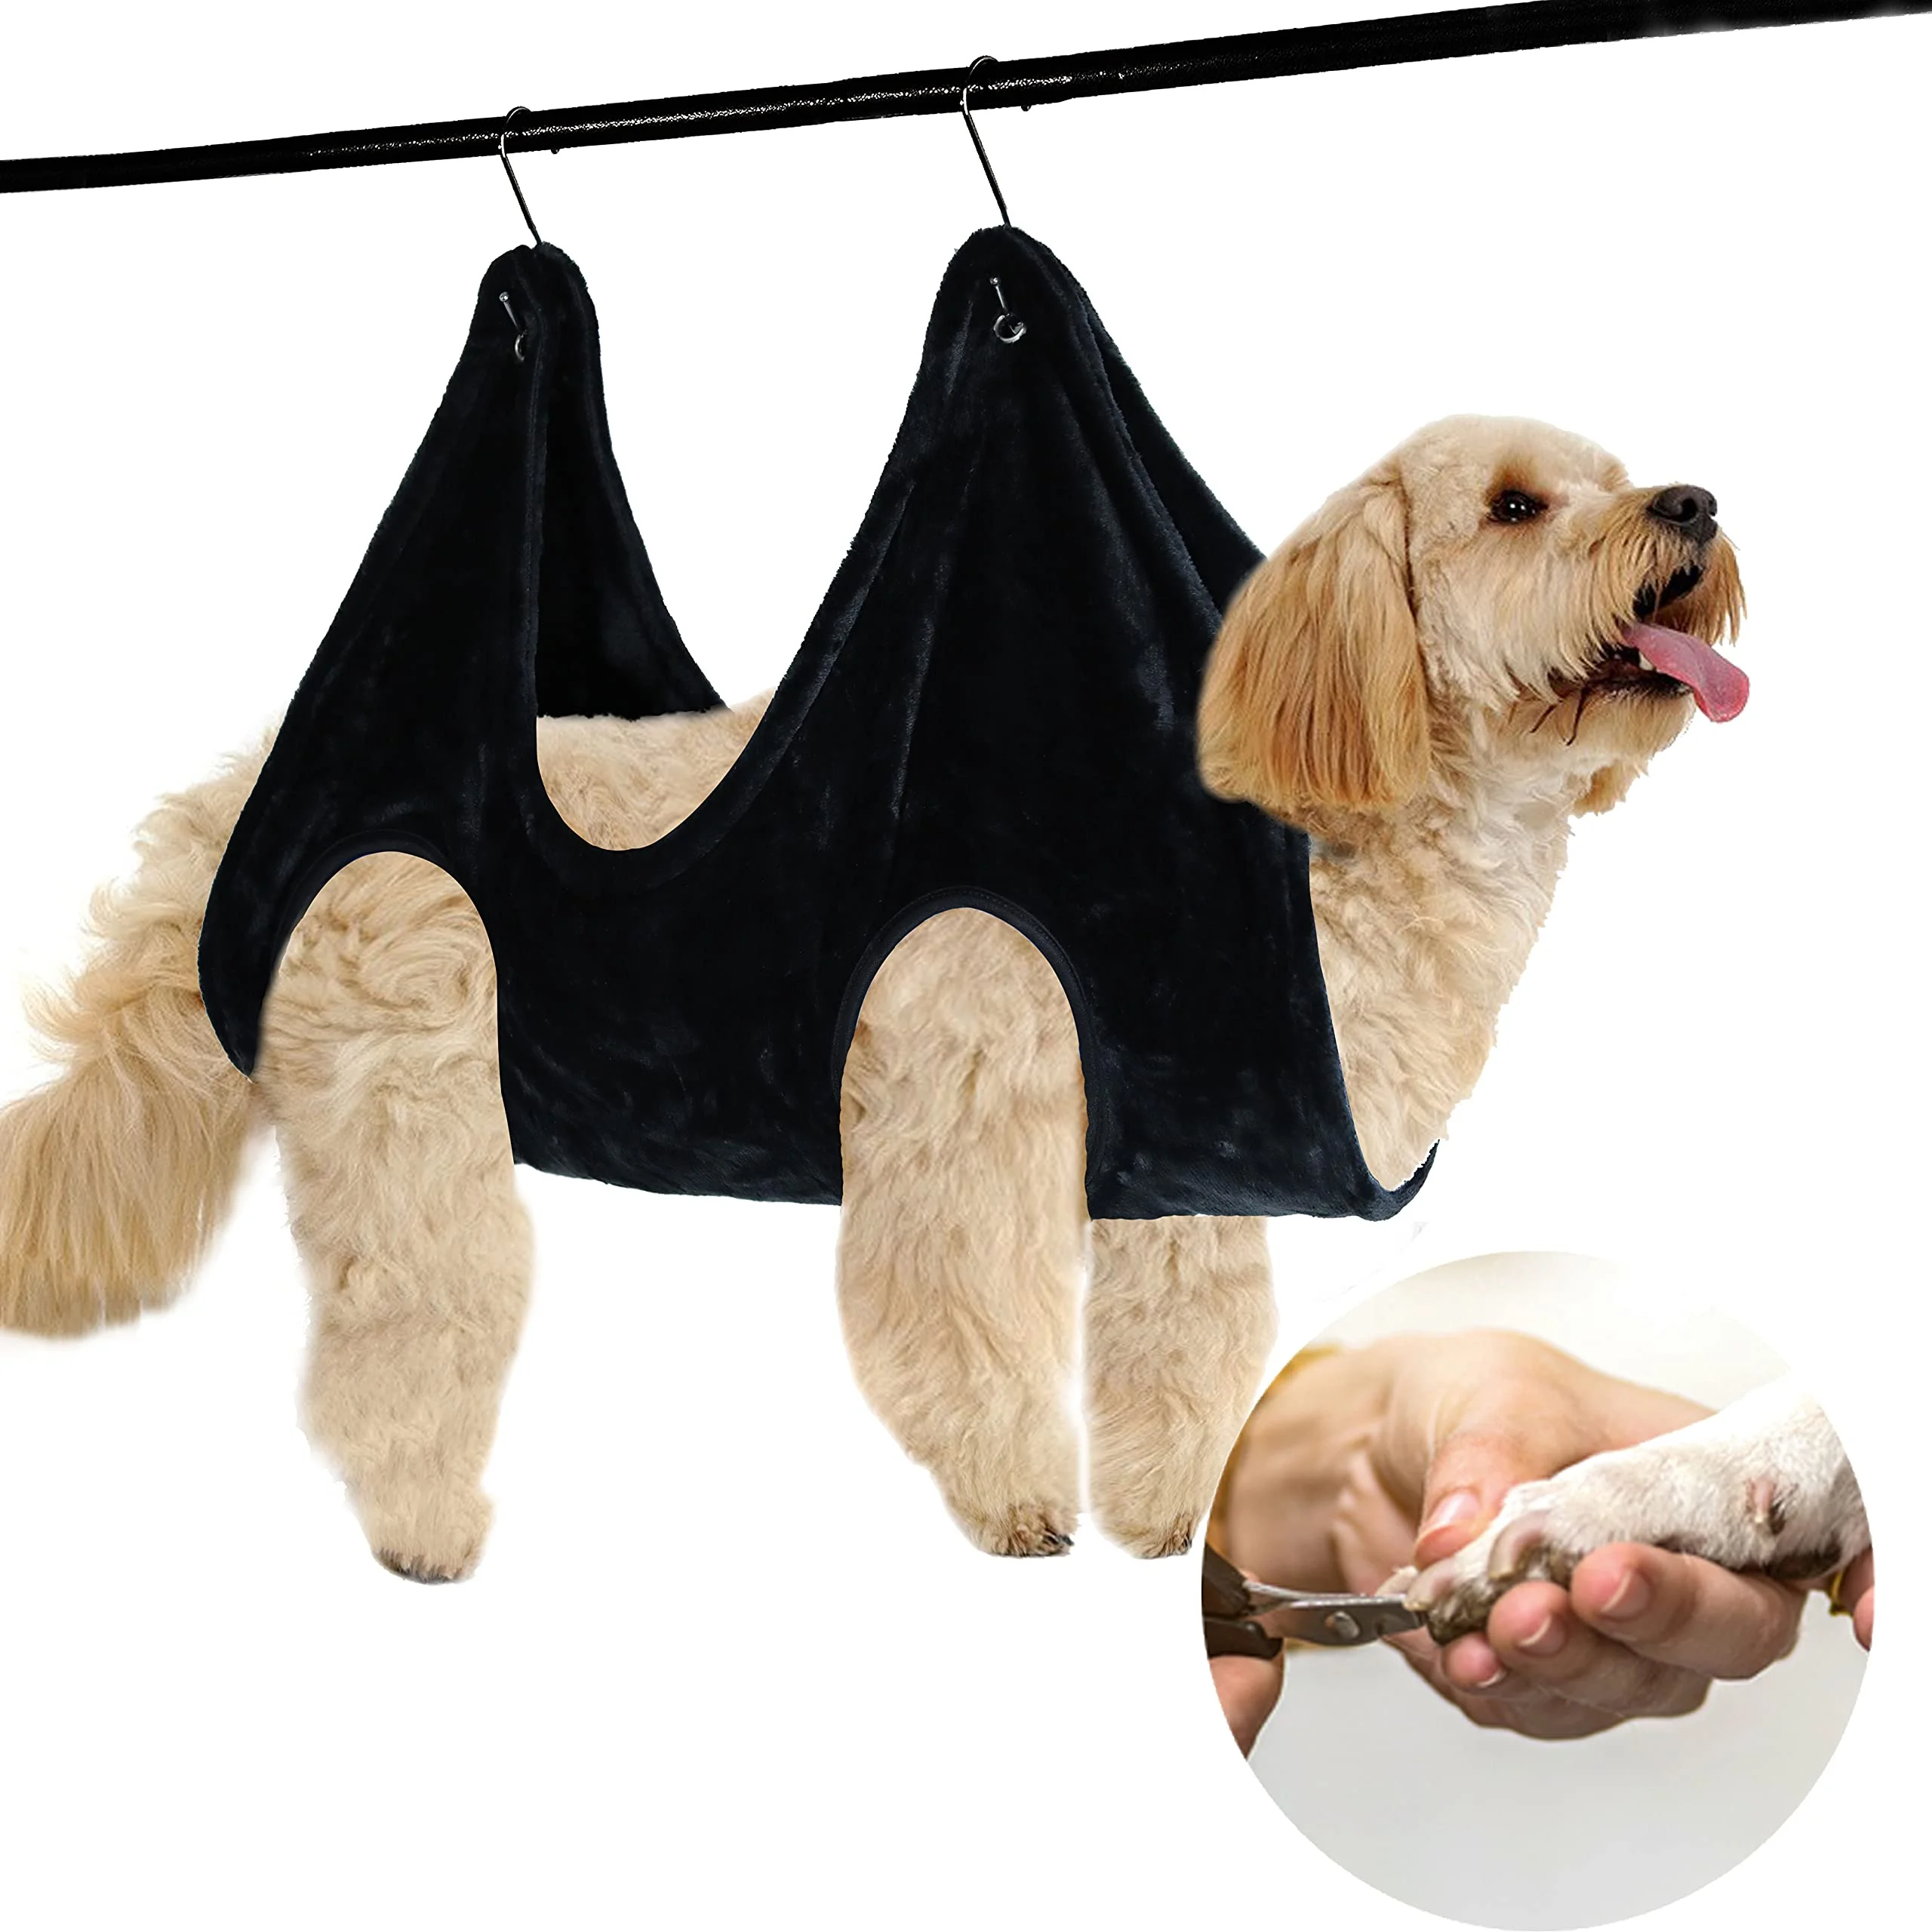 

Nail Bathing Washing Grooming Restraint Bag Pet Grooming Hammock Helper 2 in 1 Dog Drying Towel for Dog Cat, Black